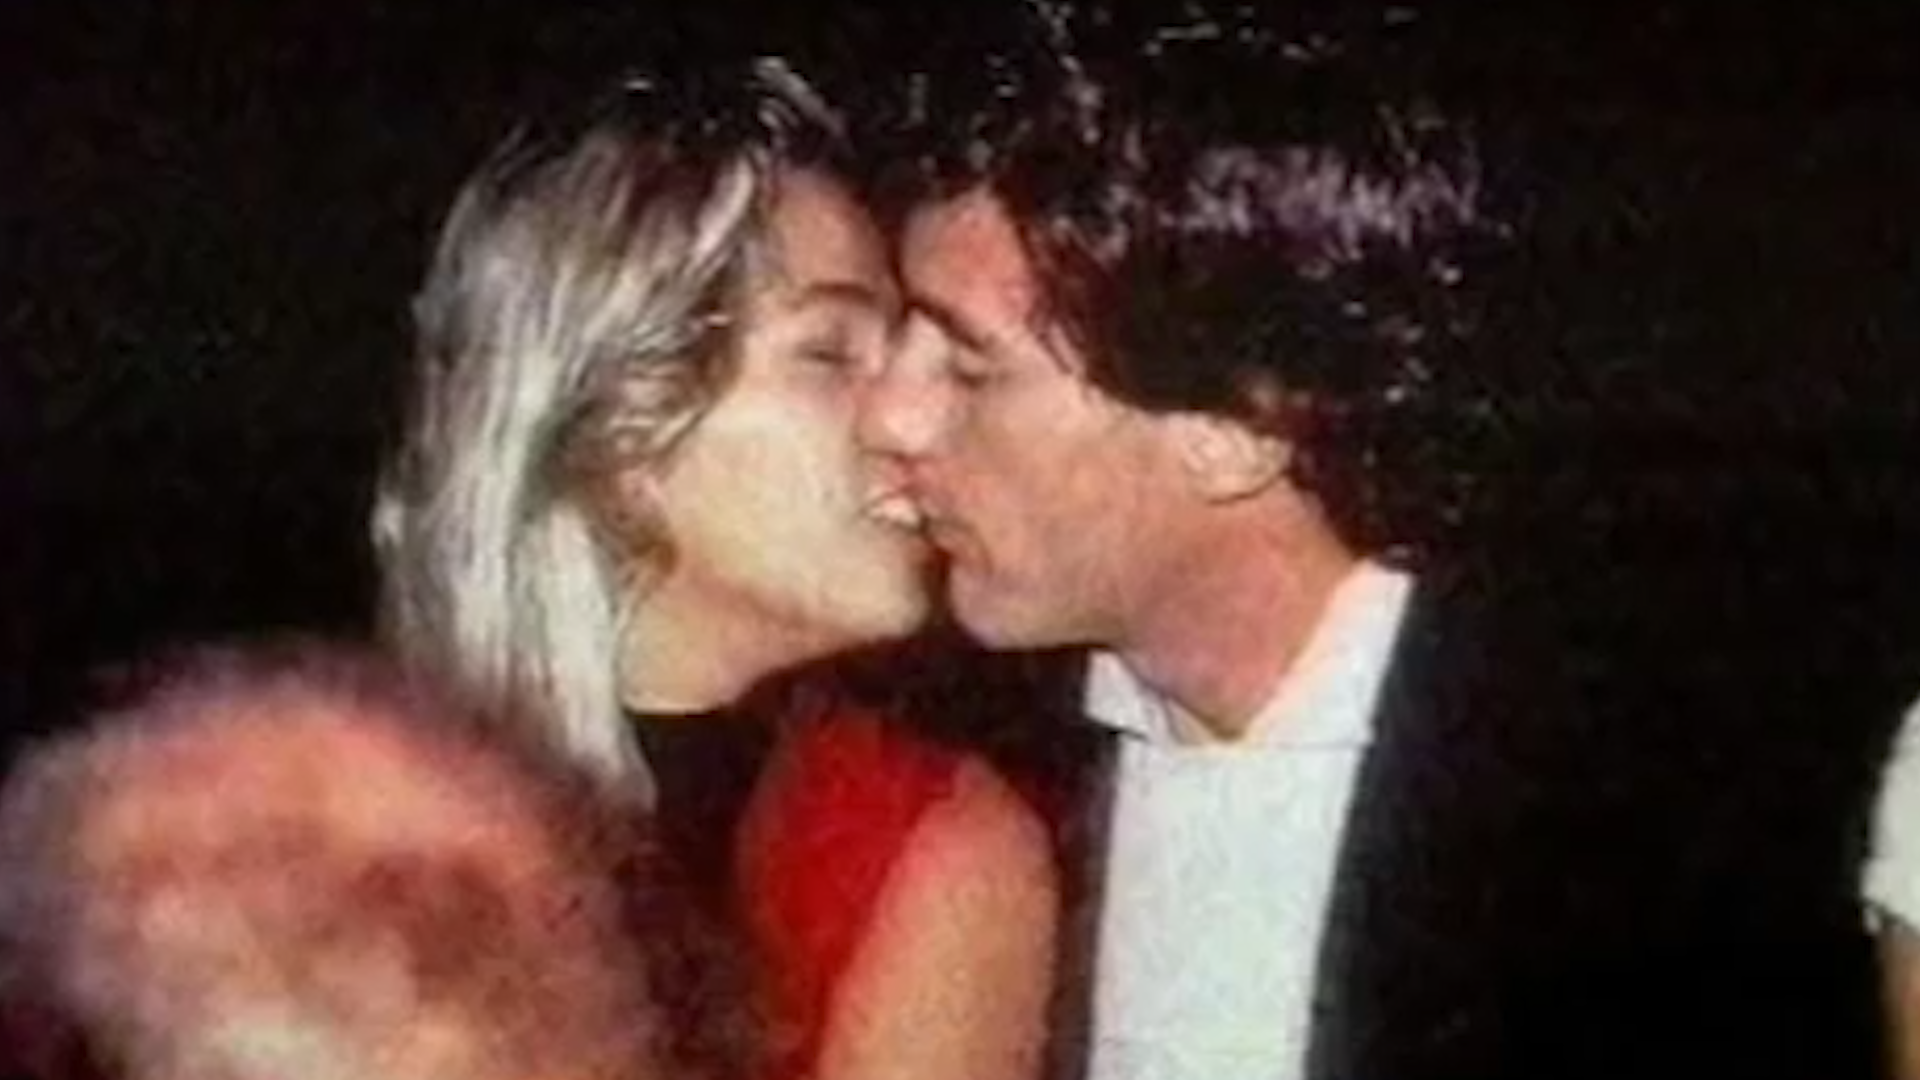 Ayrton kissing Adriane.